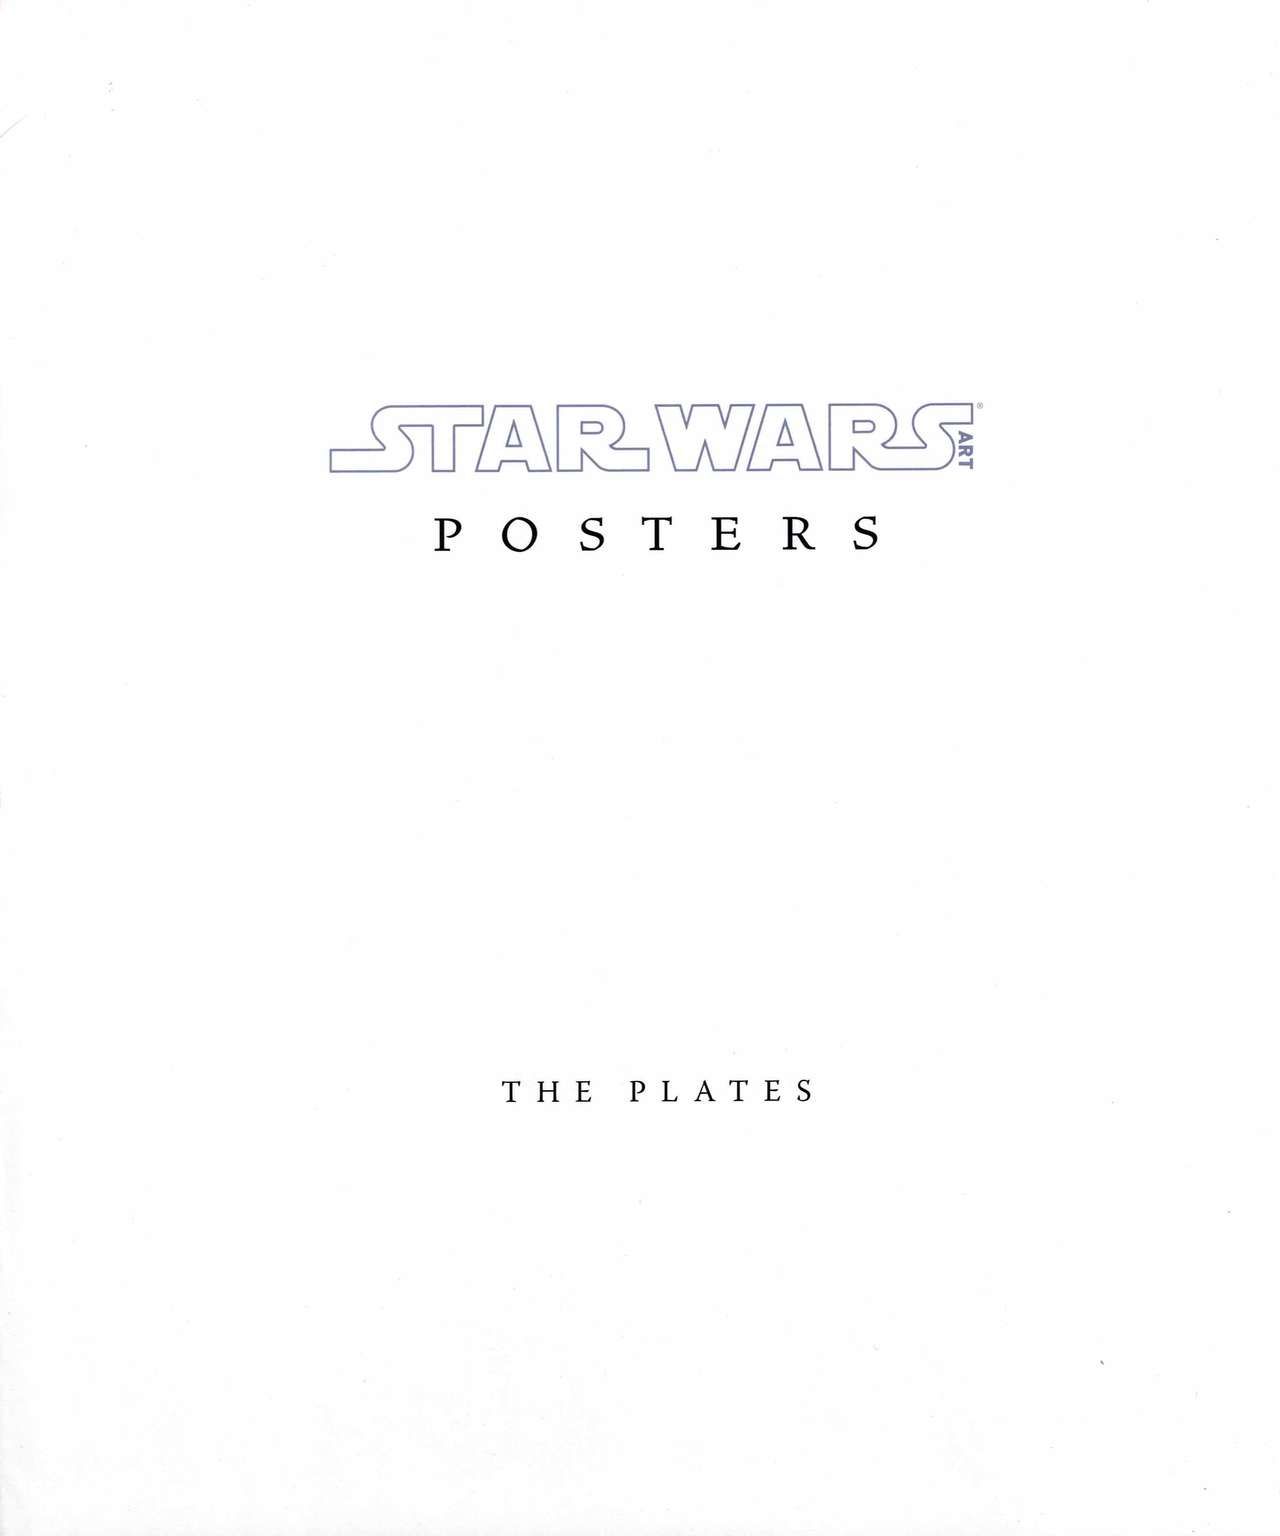 Star Wars Art - Posters 14